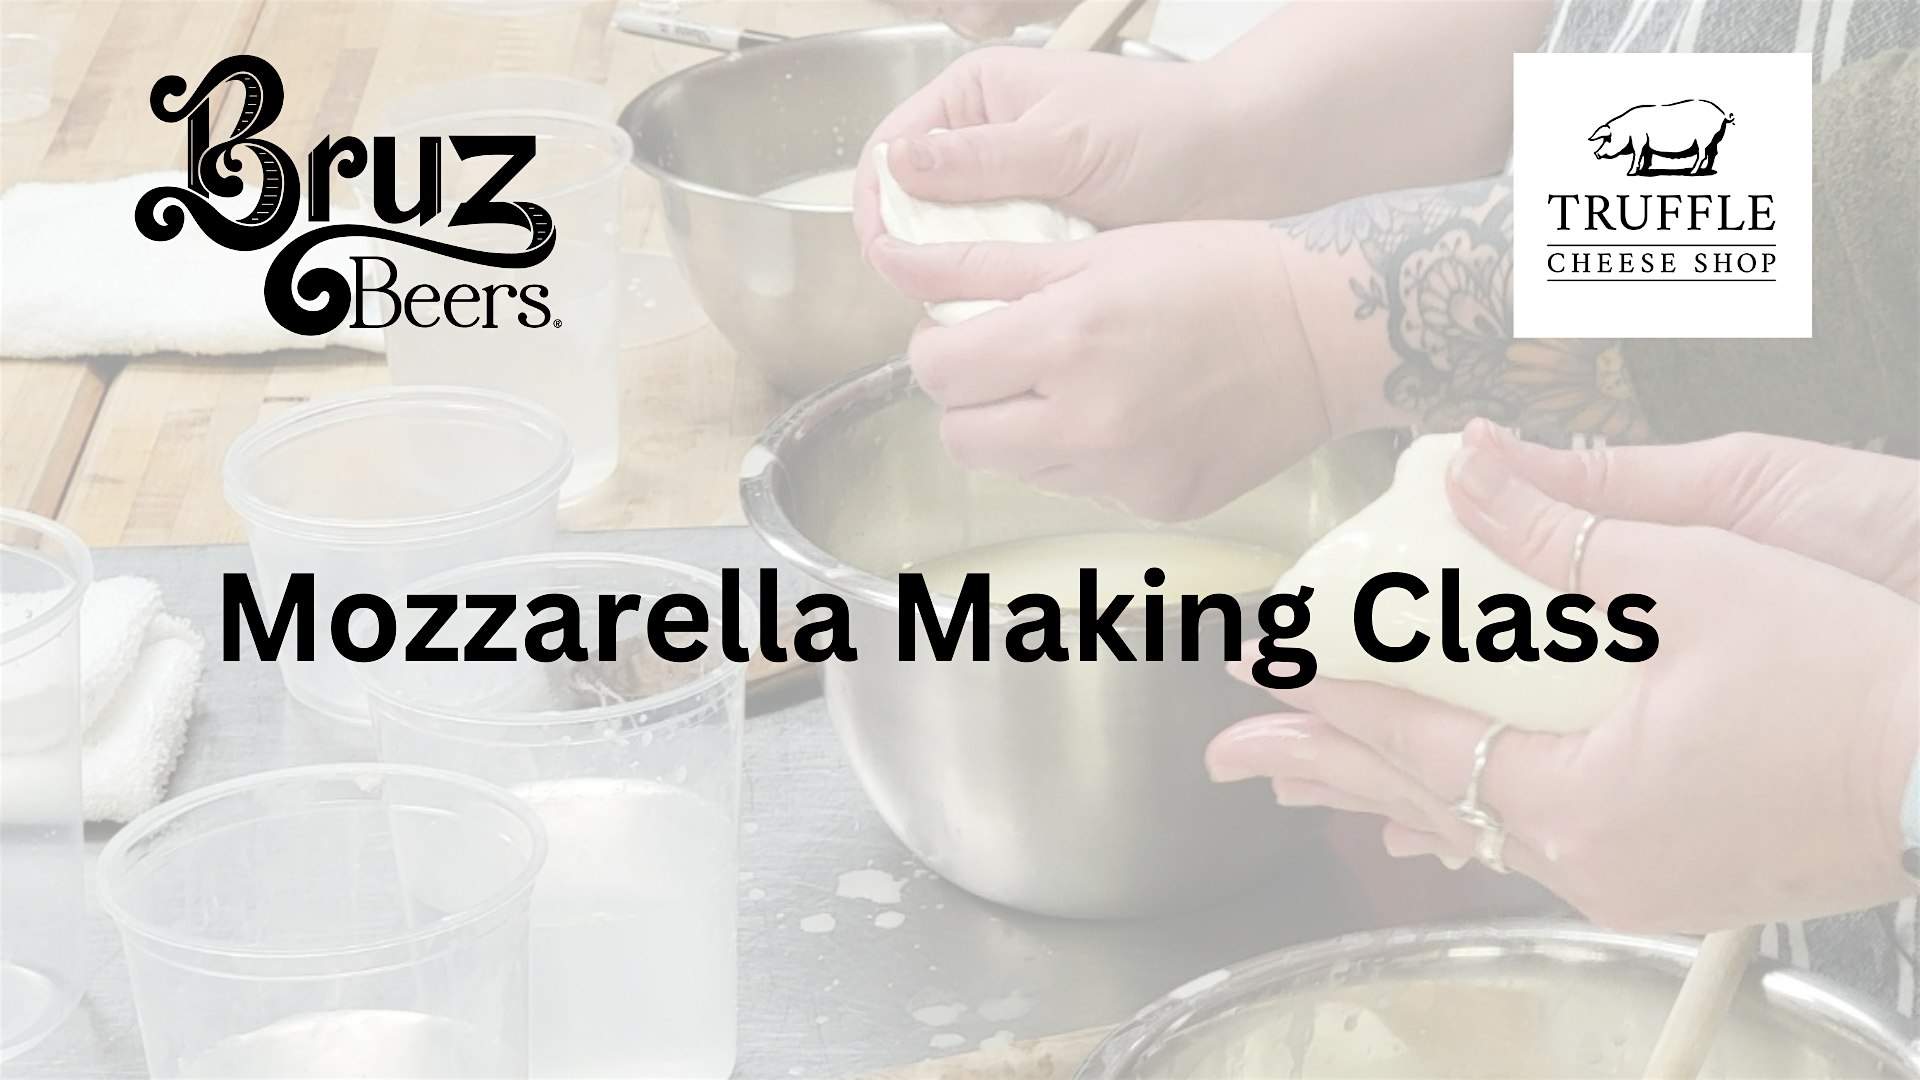 Mozzarella Making Class at Bruz Beers Midtown